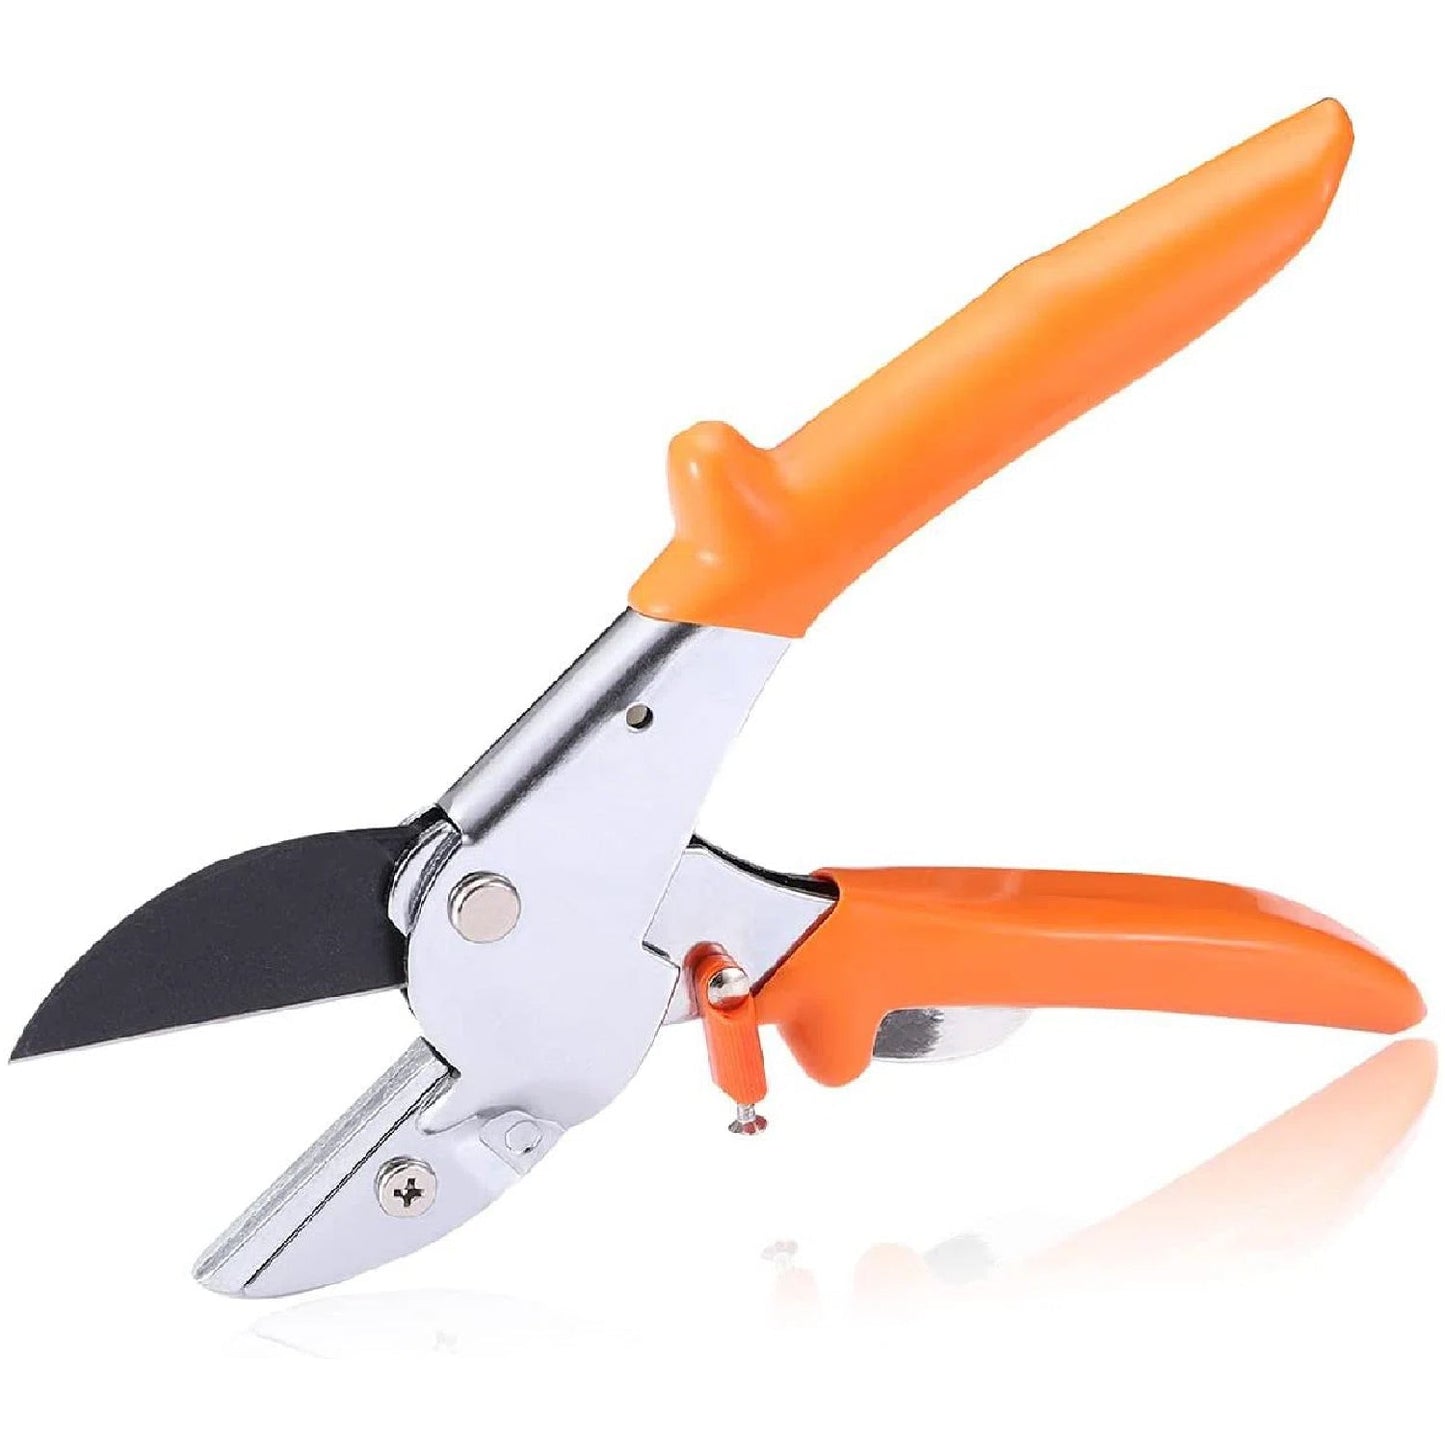 Casa De Amor Pruning Shear Cutter - 1 Pc ( Anvil Pruner, Steel Blade) | Plant Cutter for Home Garden | Wood Branch Trimmer